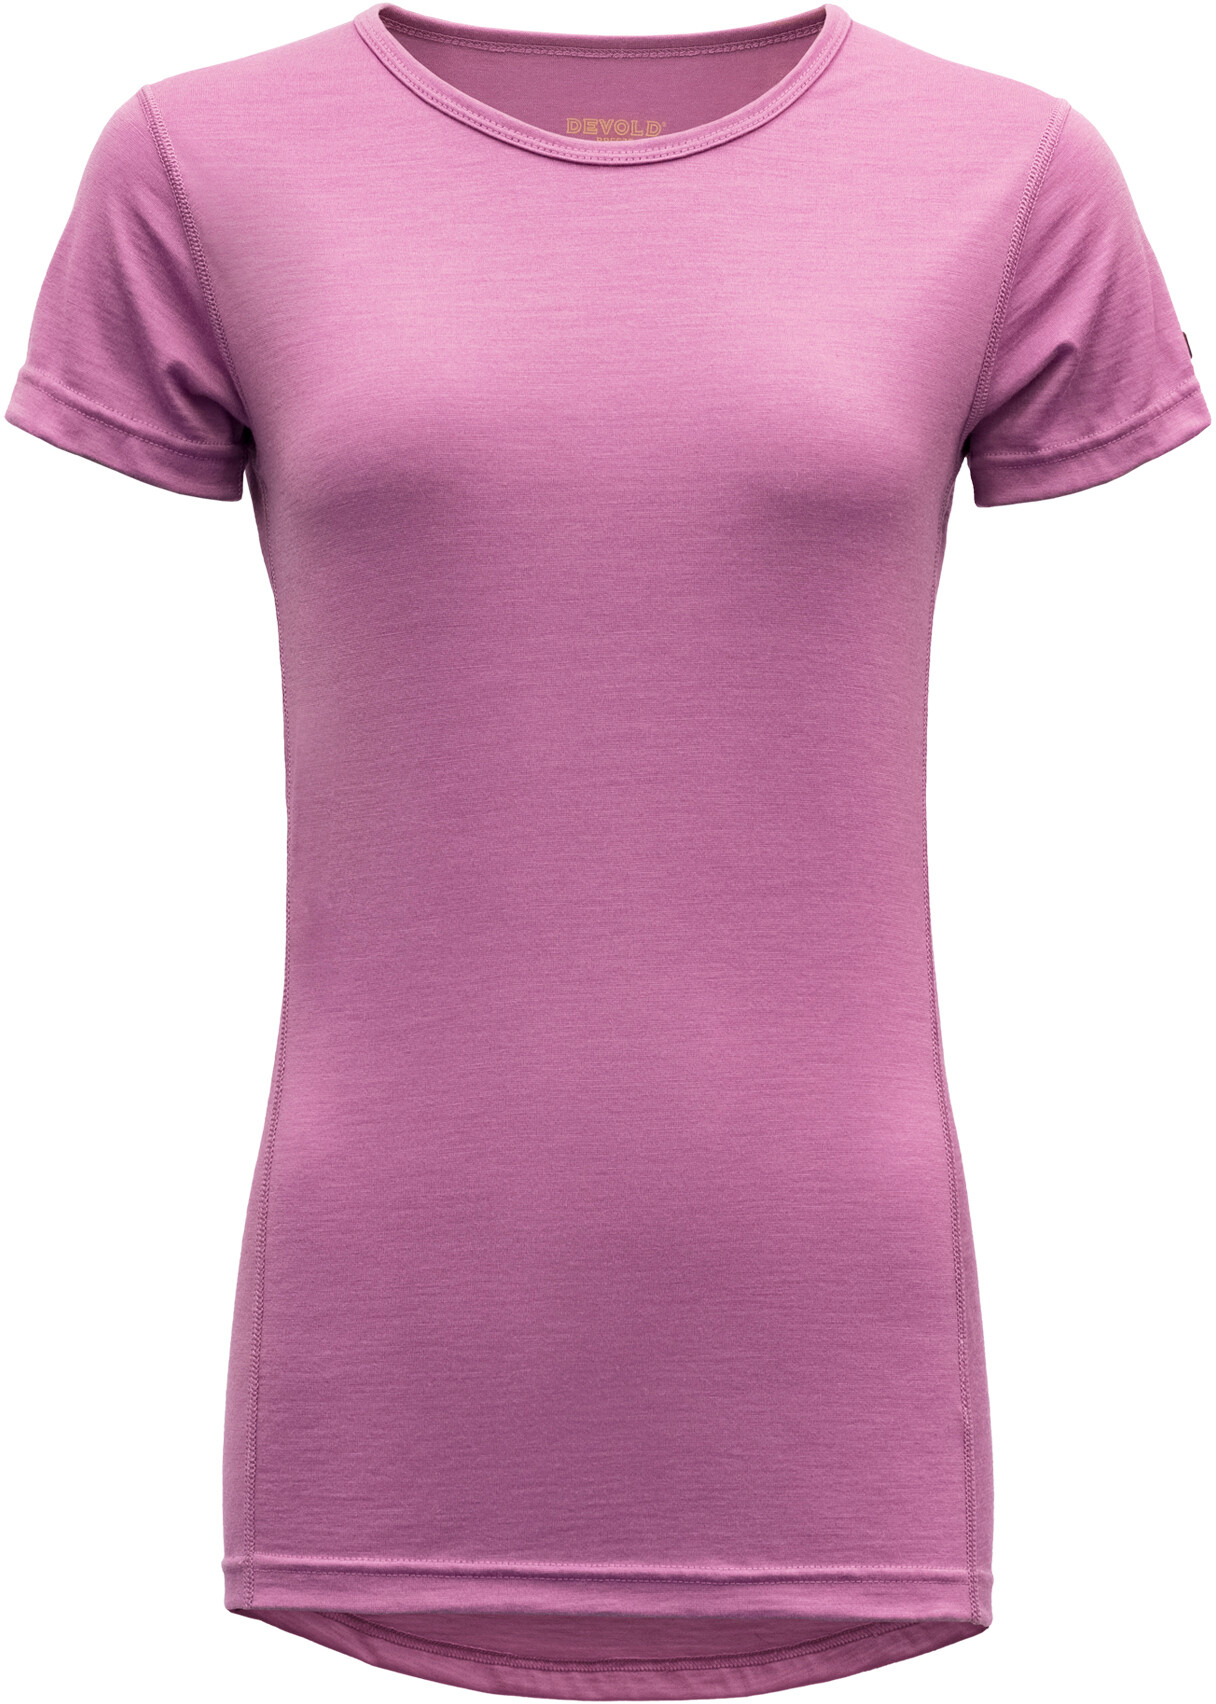 YUNY Womens Long Sleeve Hood Stripes Printed Pullover Hoodie Shirt Top Purple S 